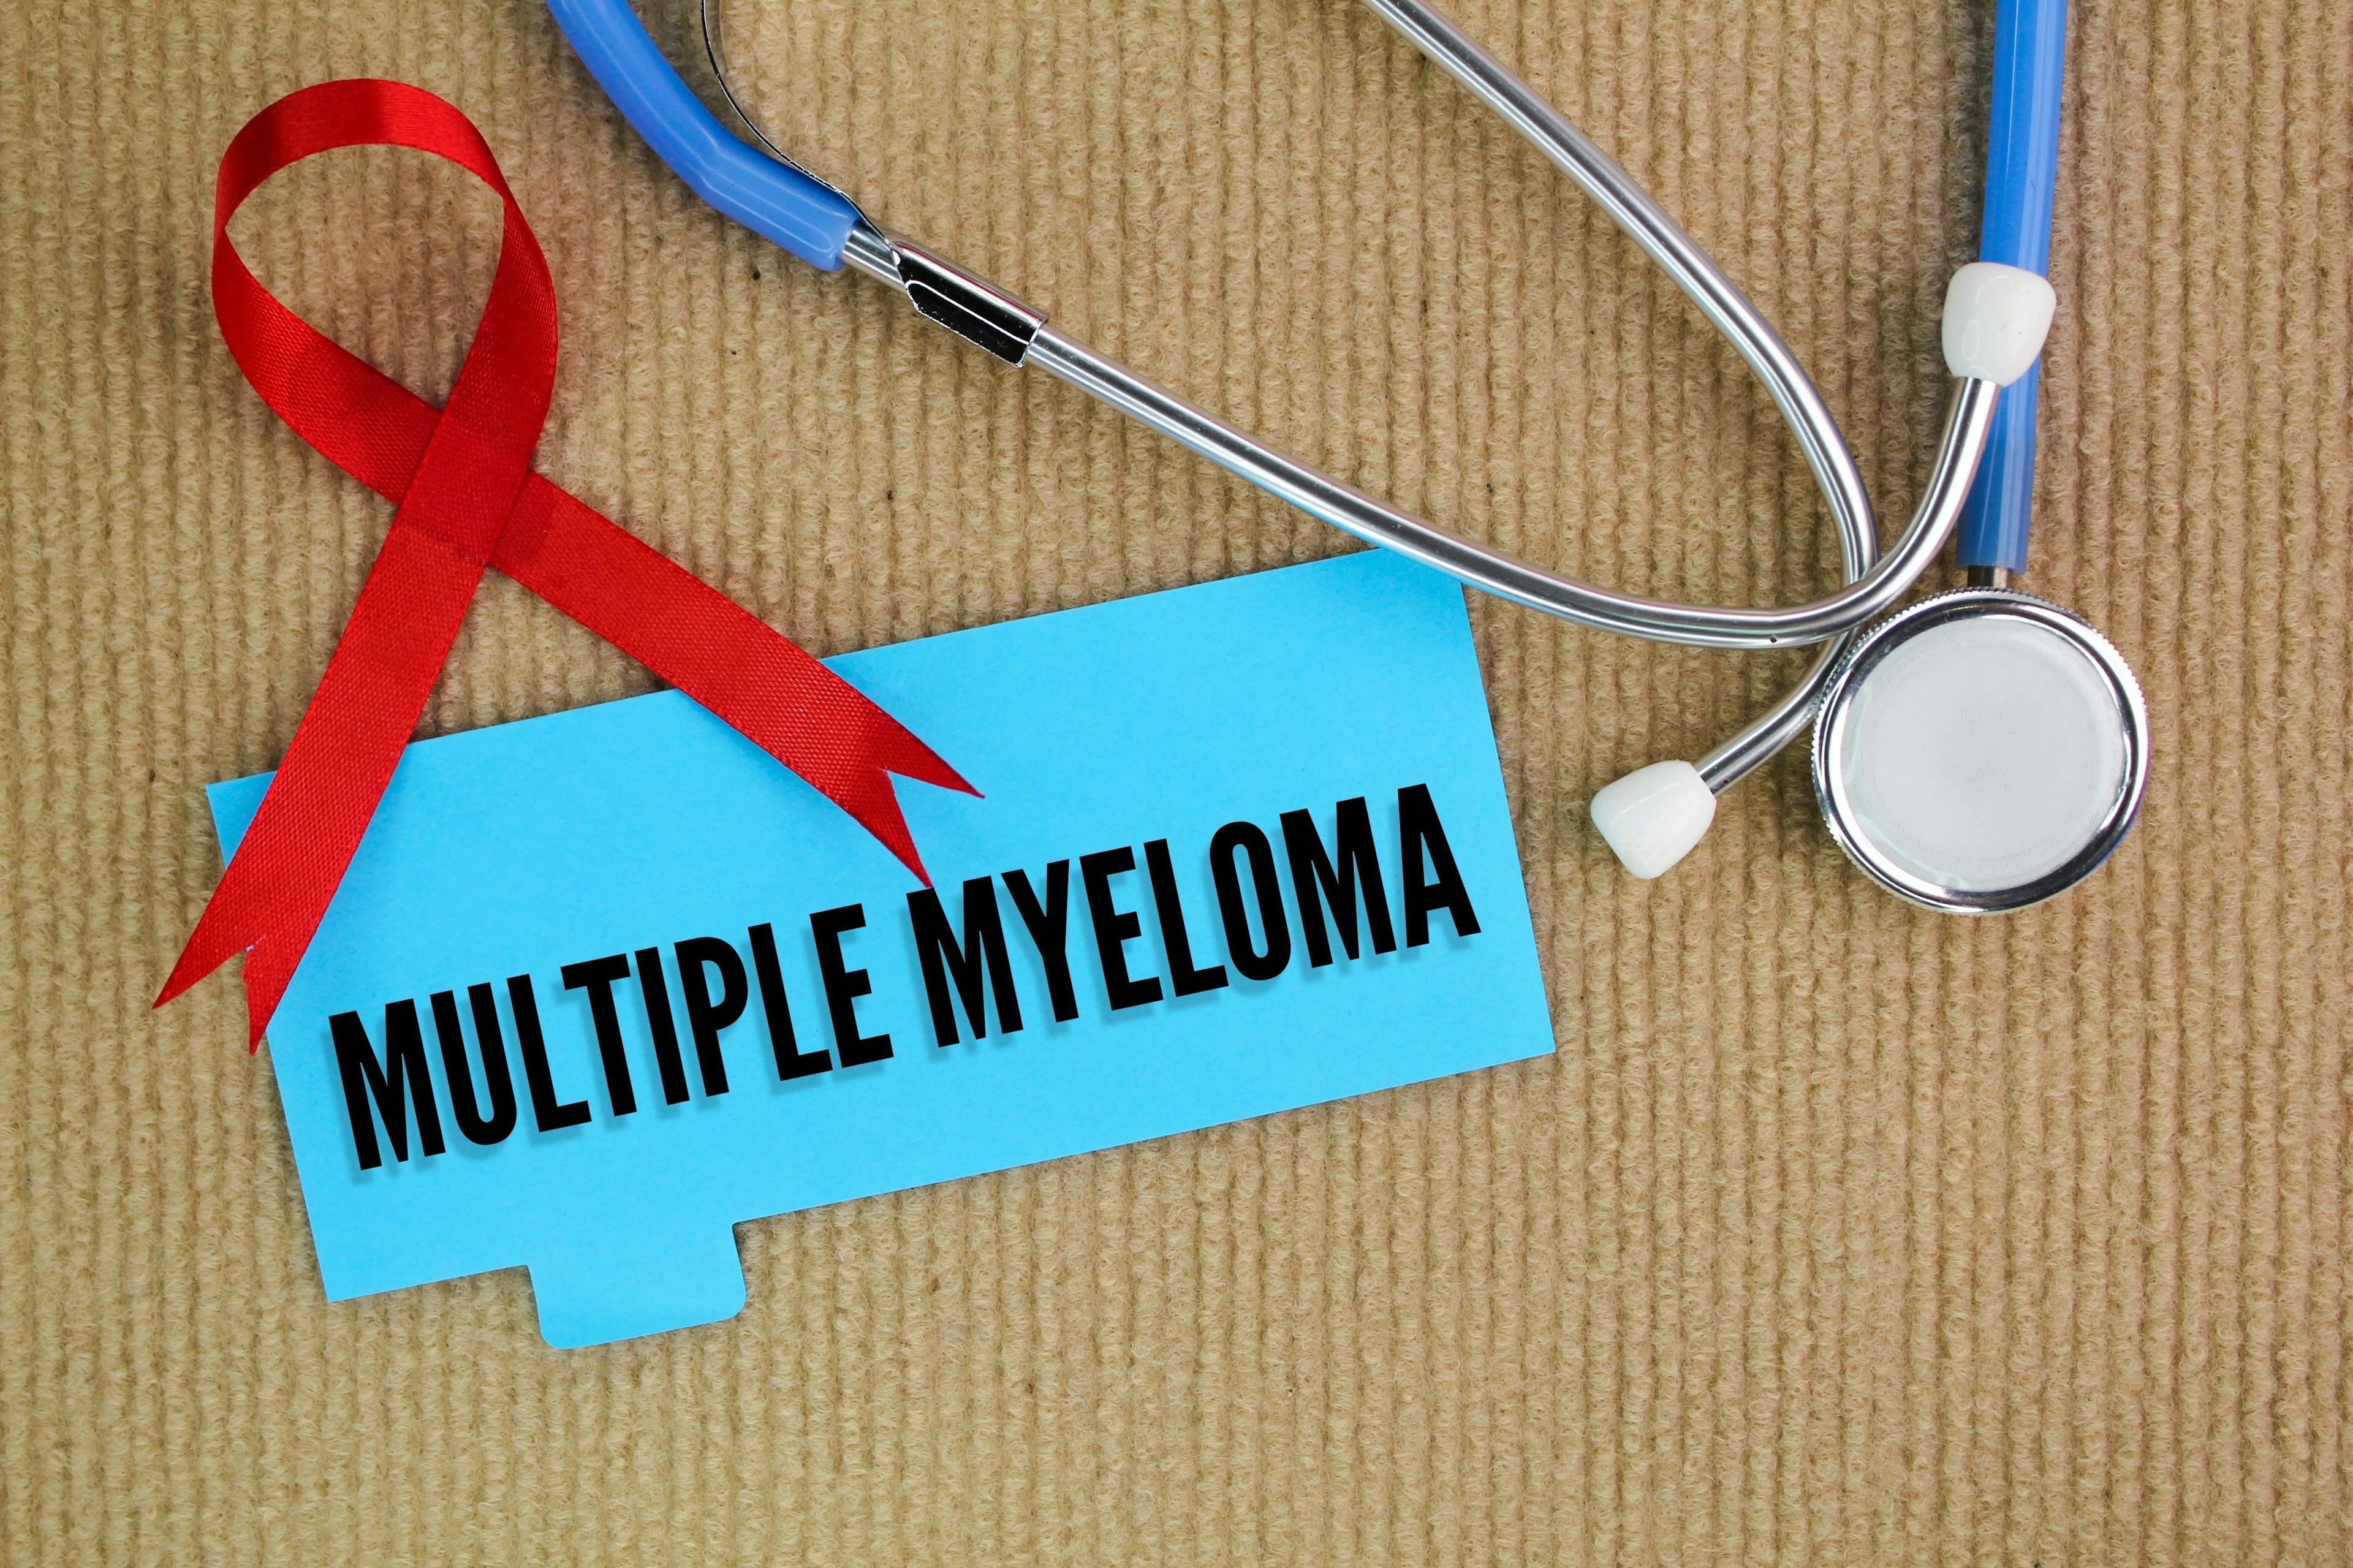 Multiple myeloma awareness -- Image credit: Fauzi | stock.adobe.com